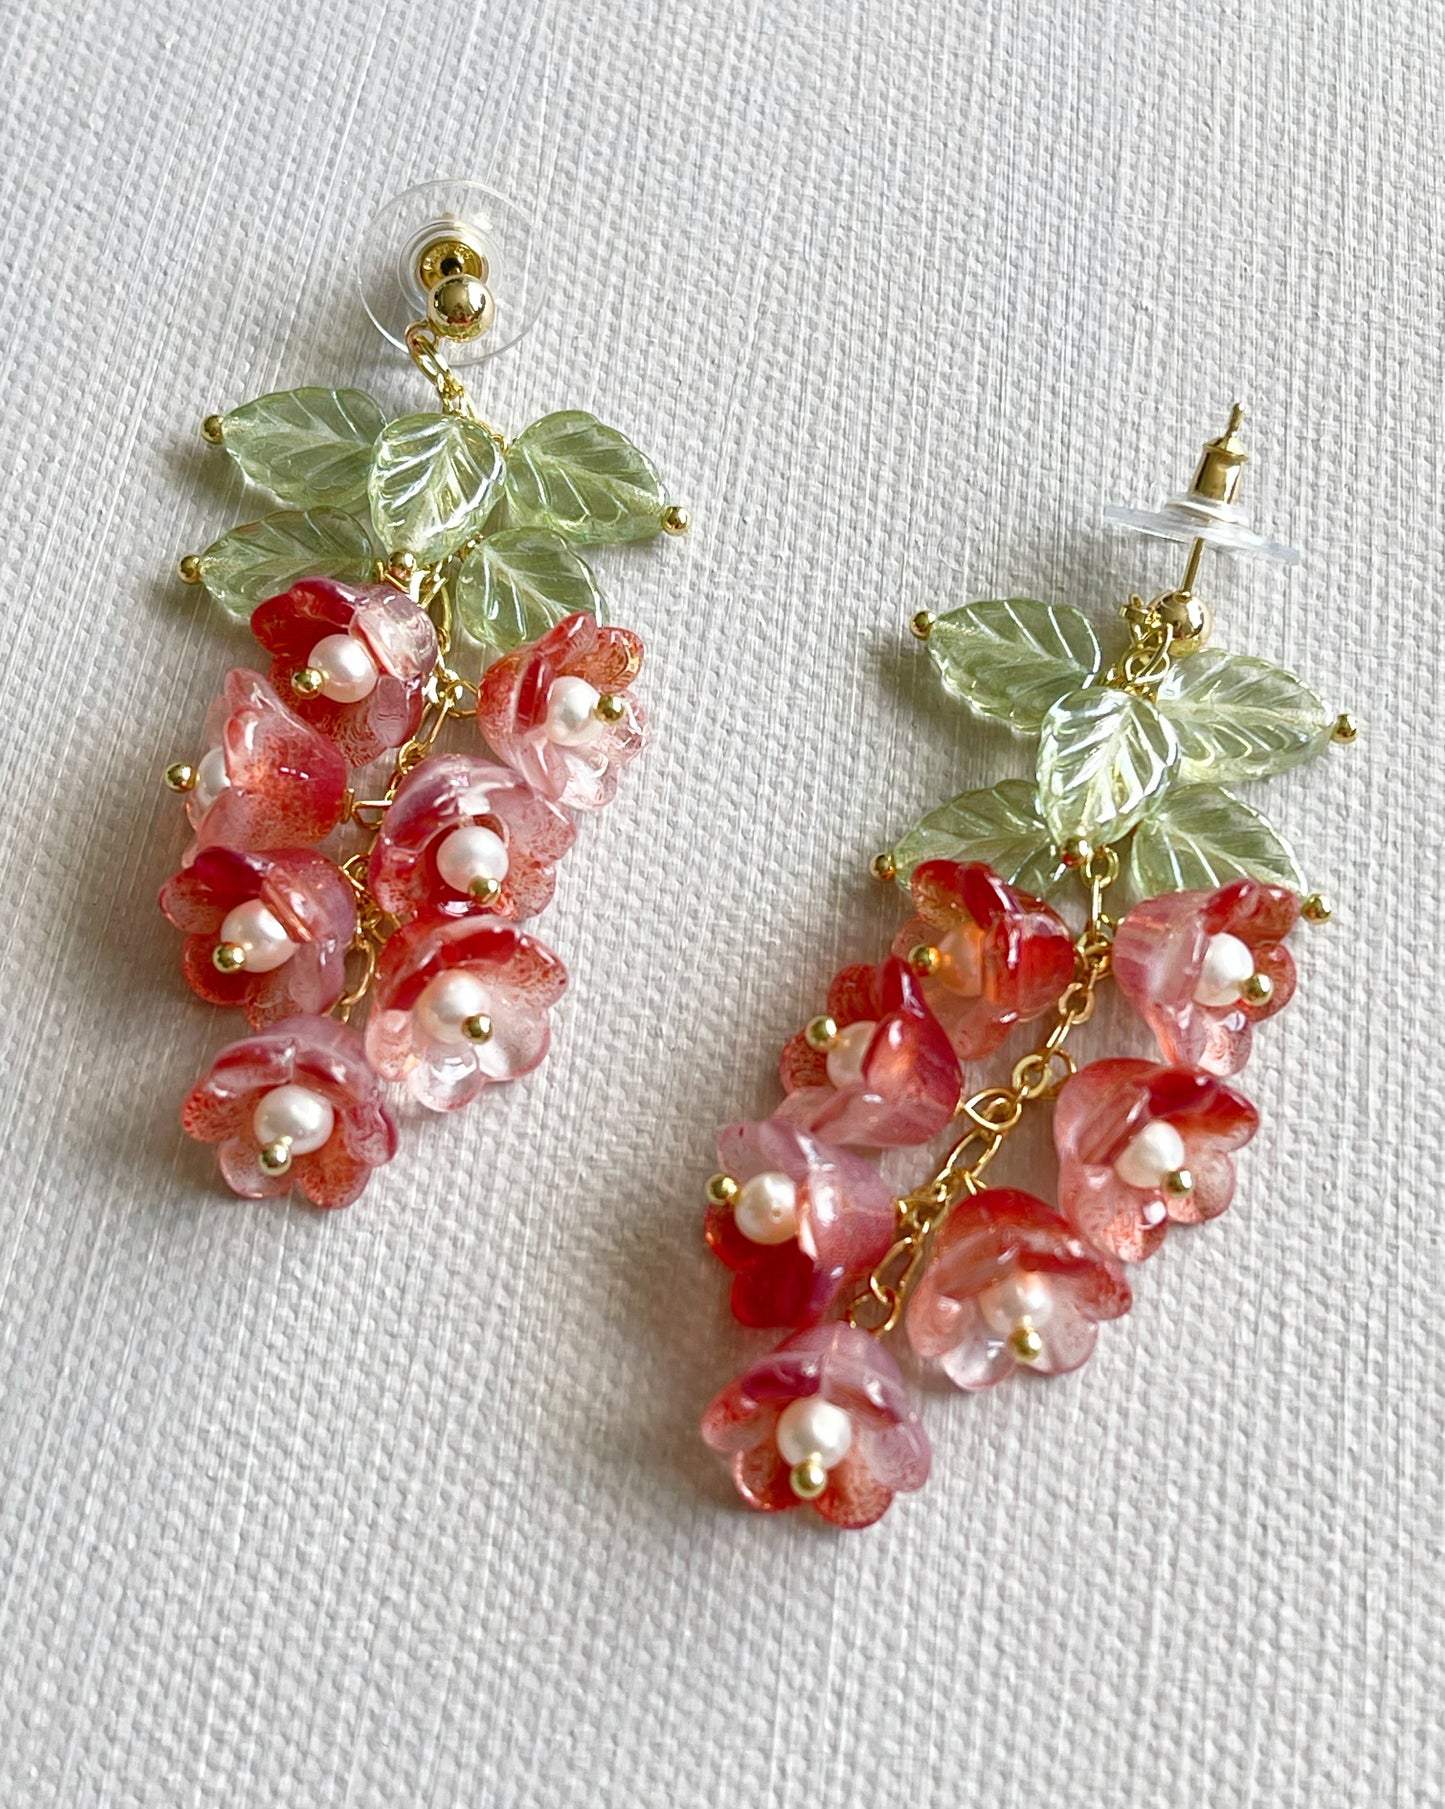 Spring Canterbury bell flowers earrings in festive red